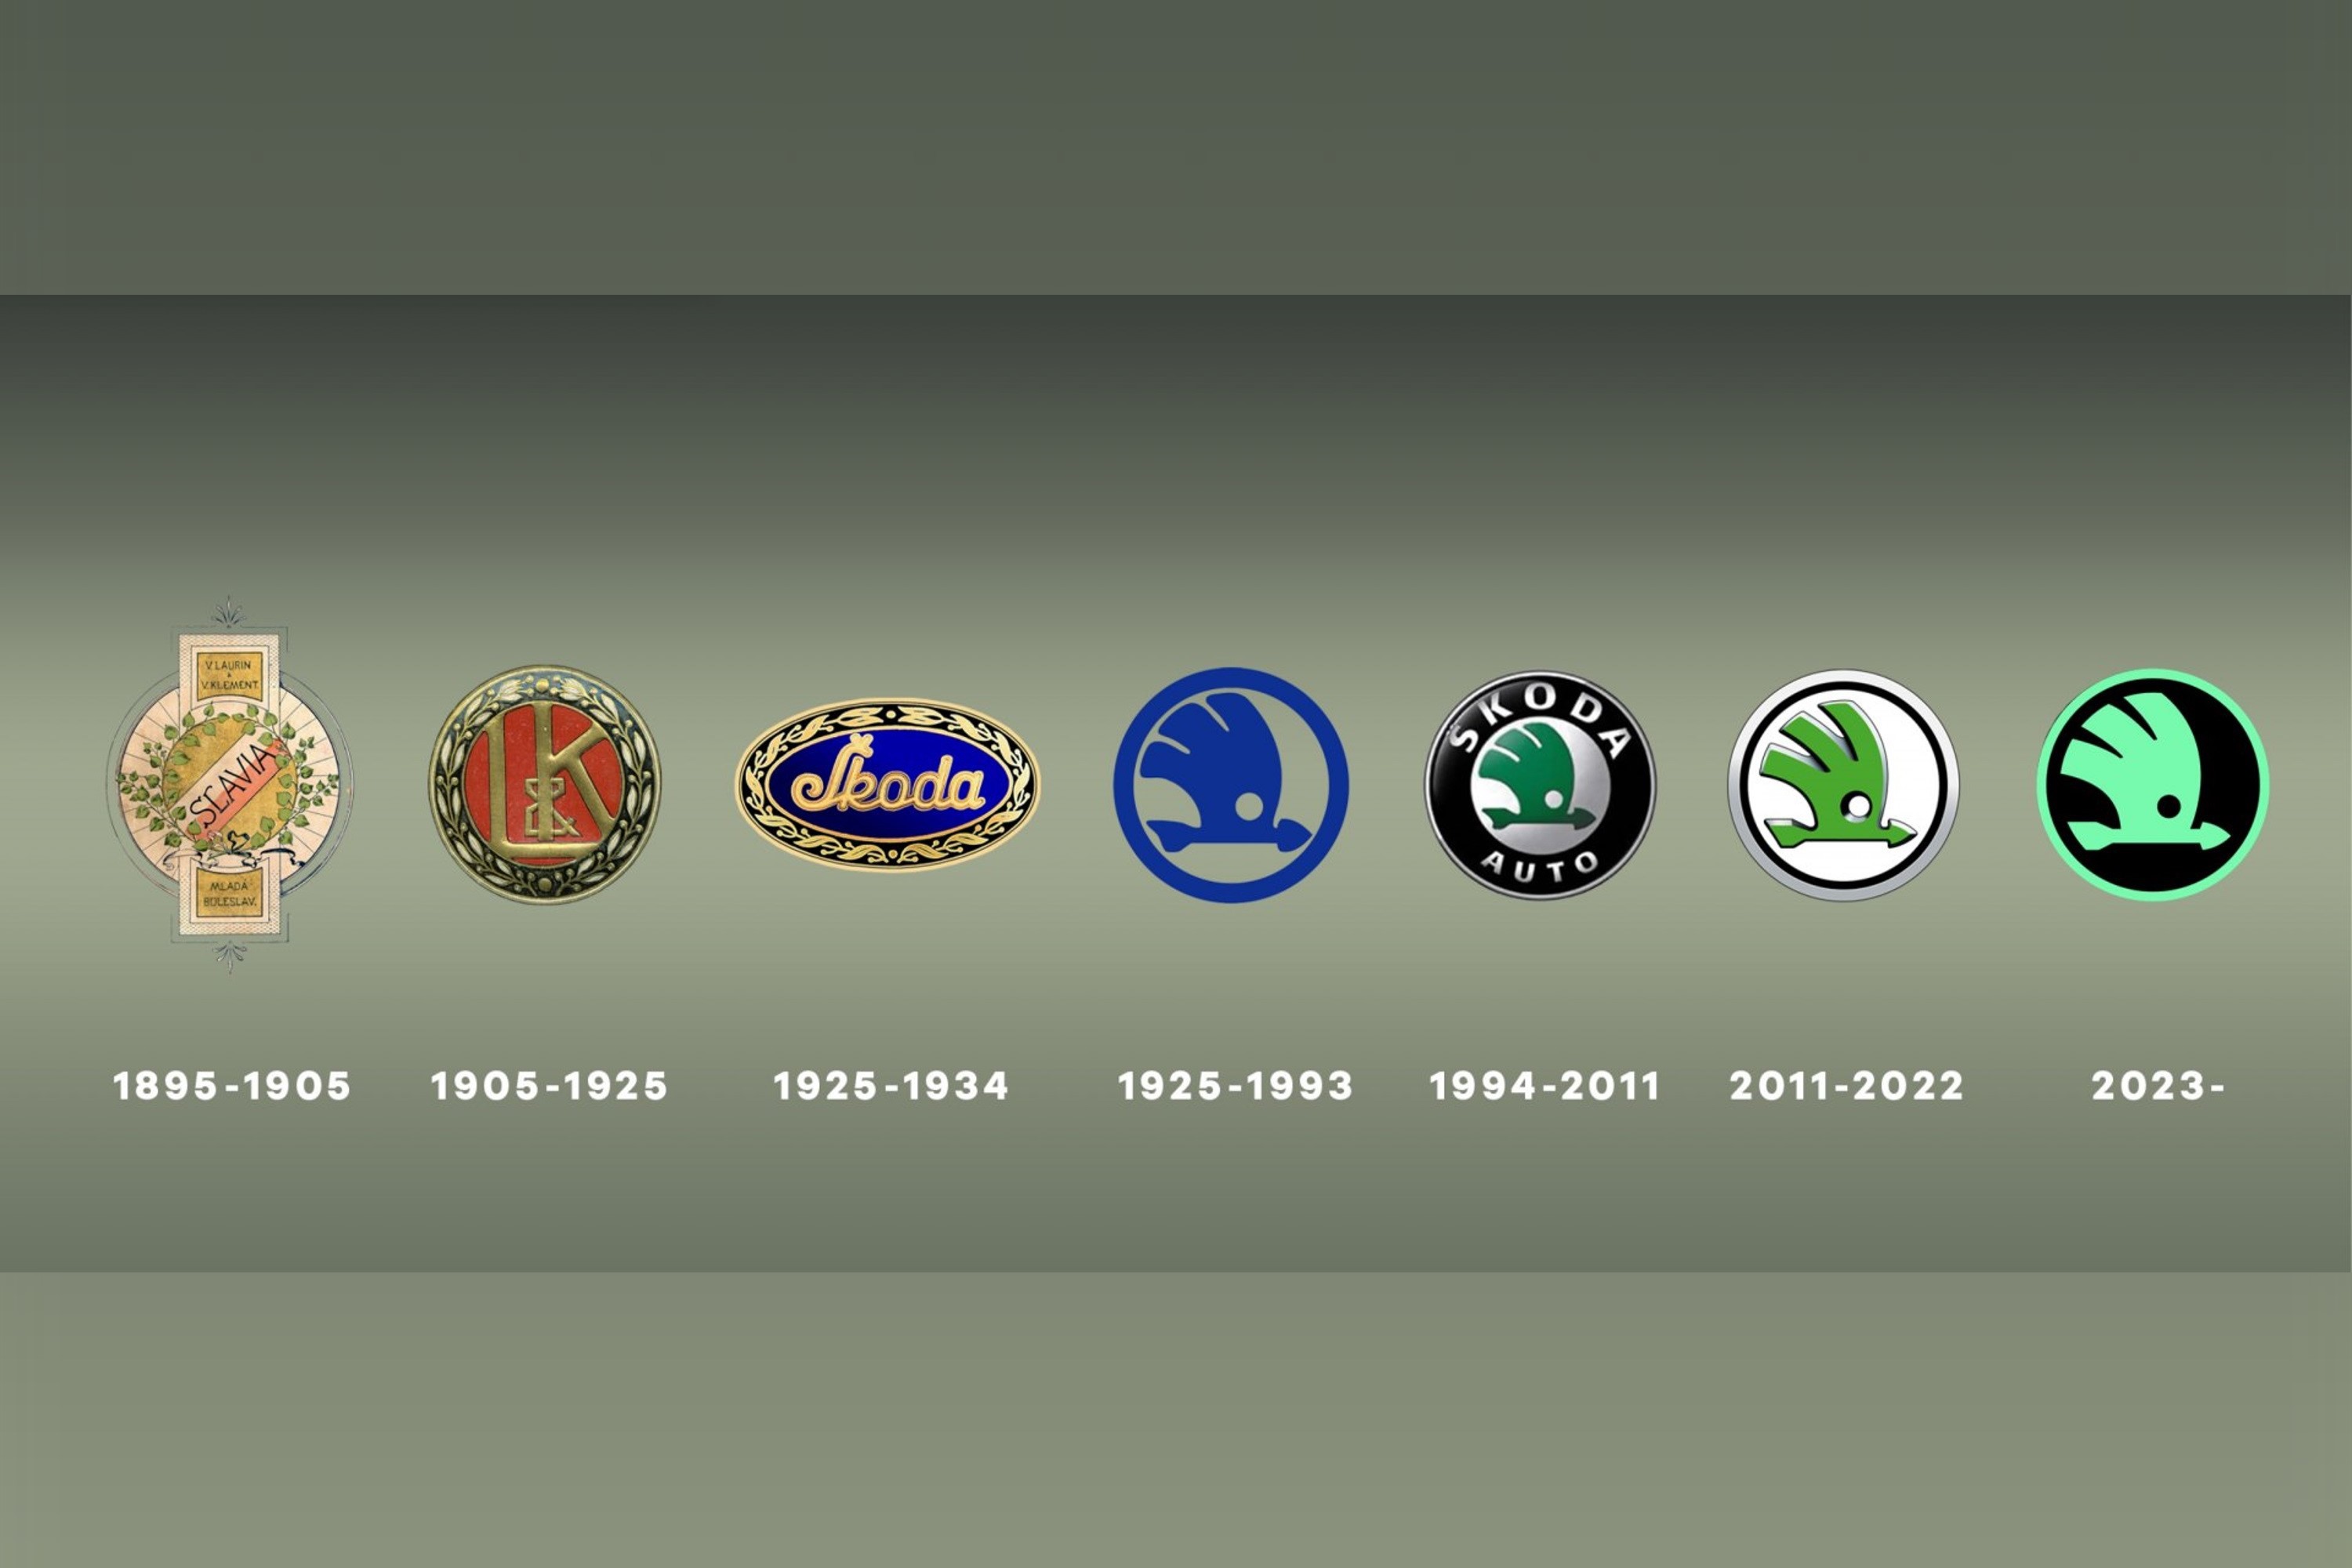 évolution du logo de la marque de voitures skoda 